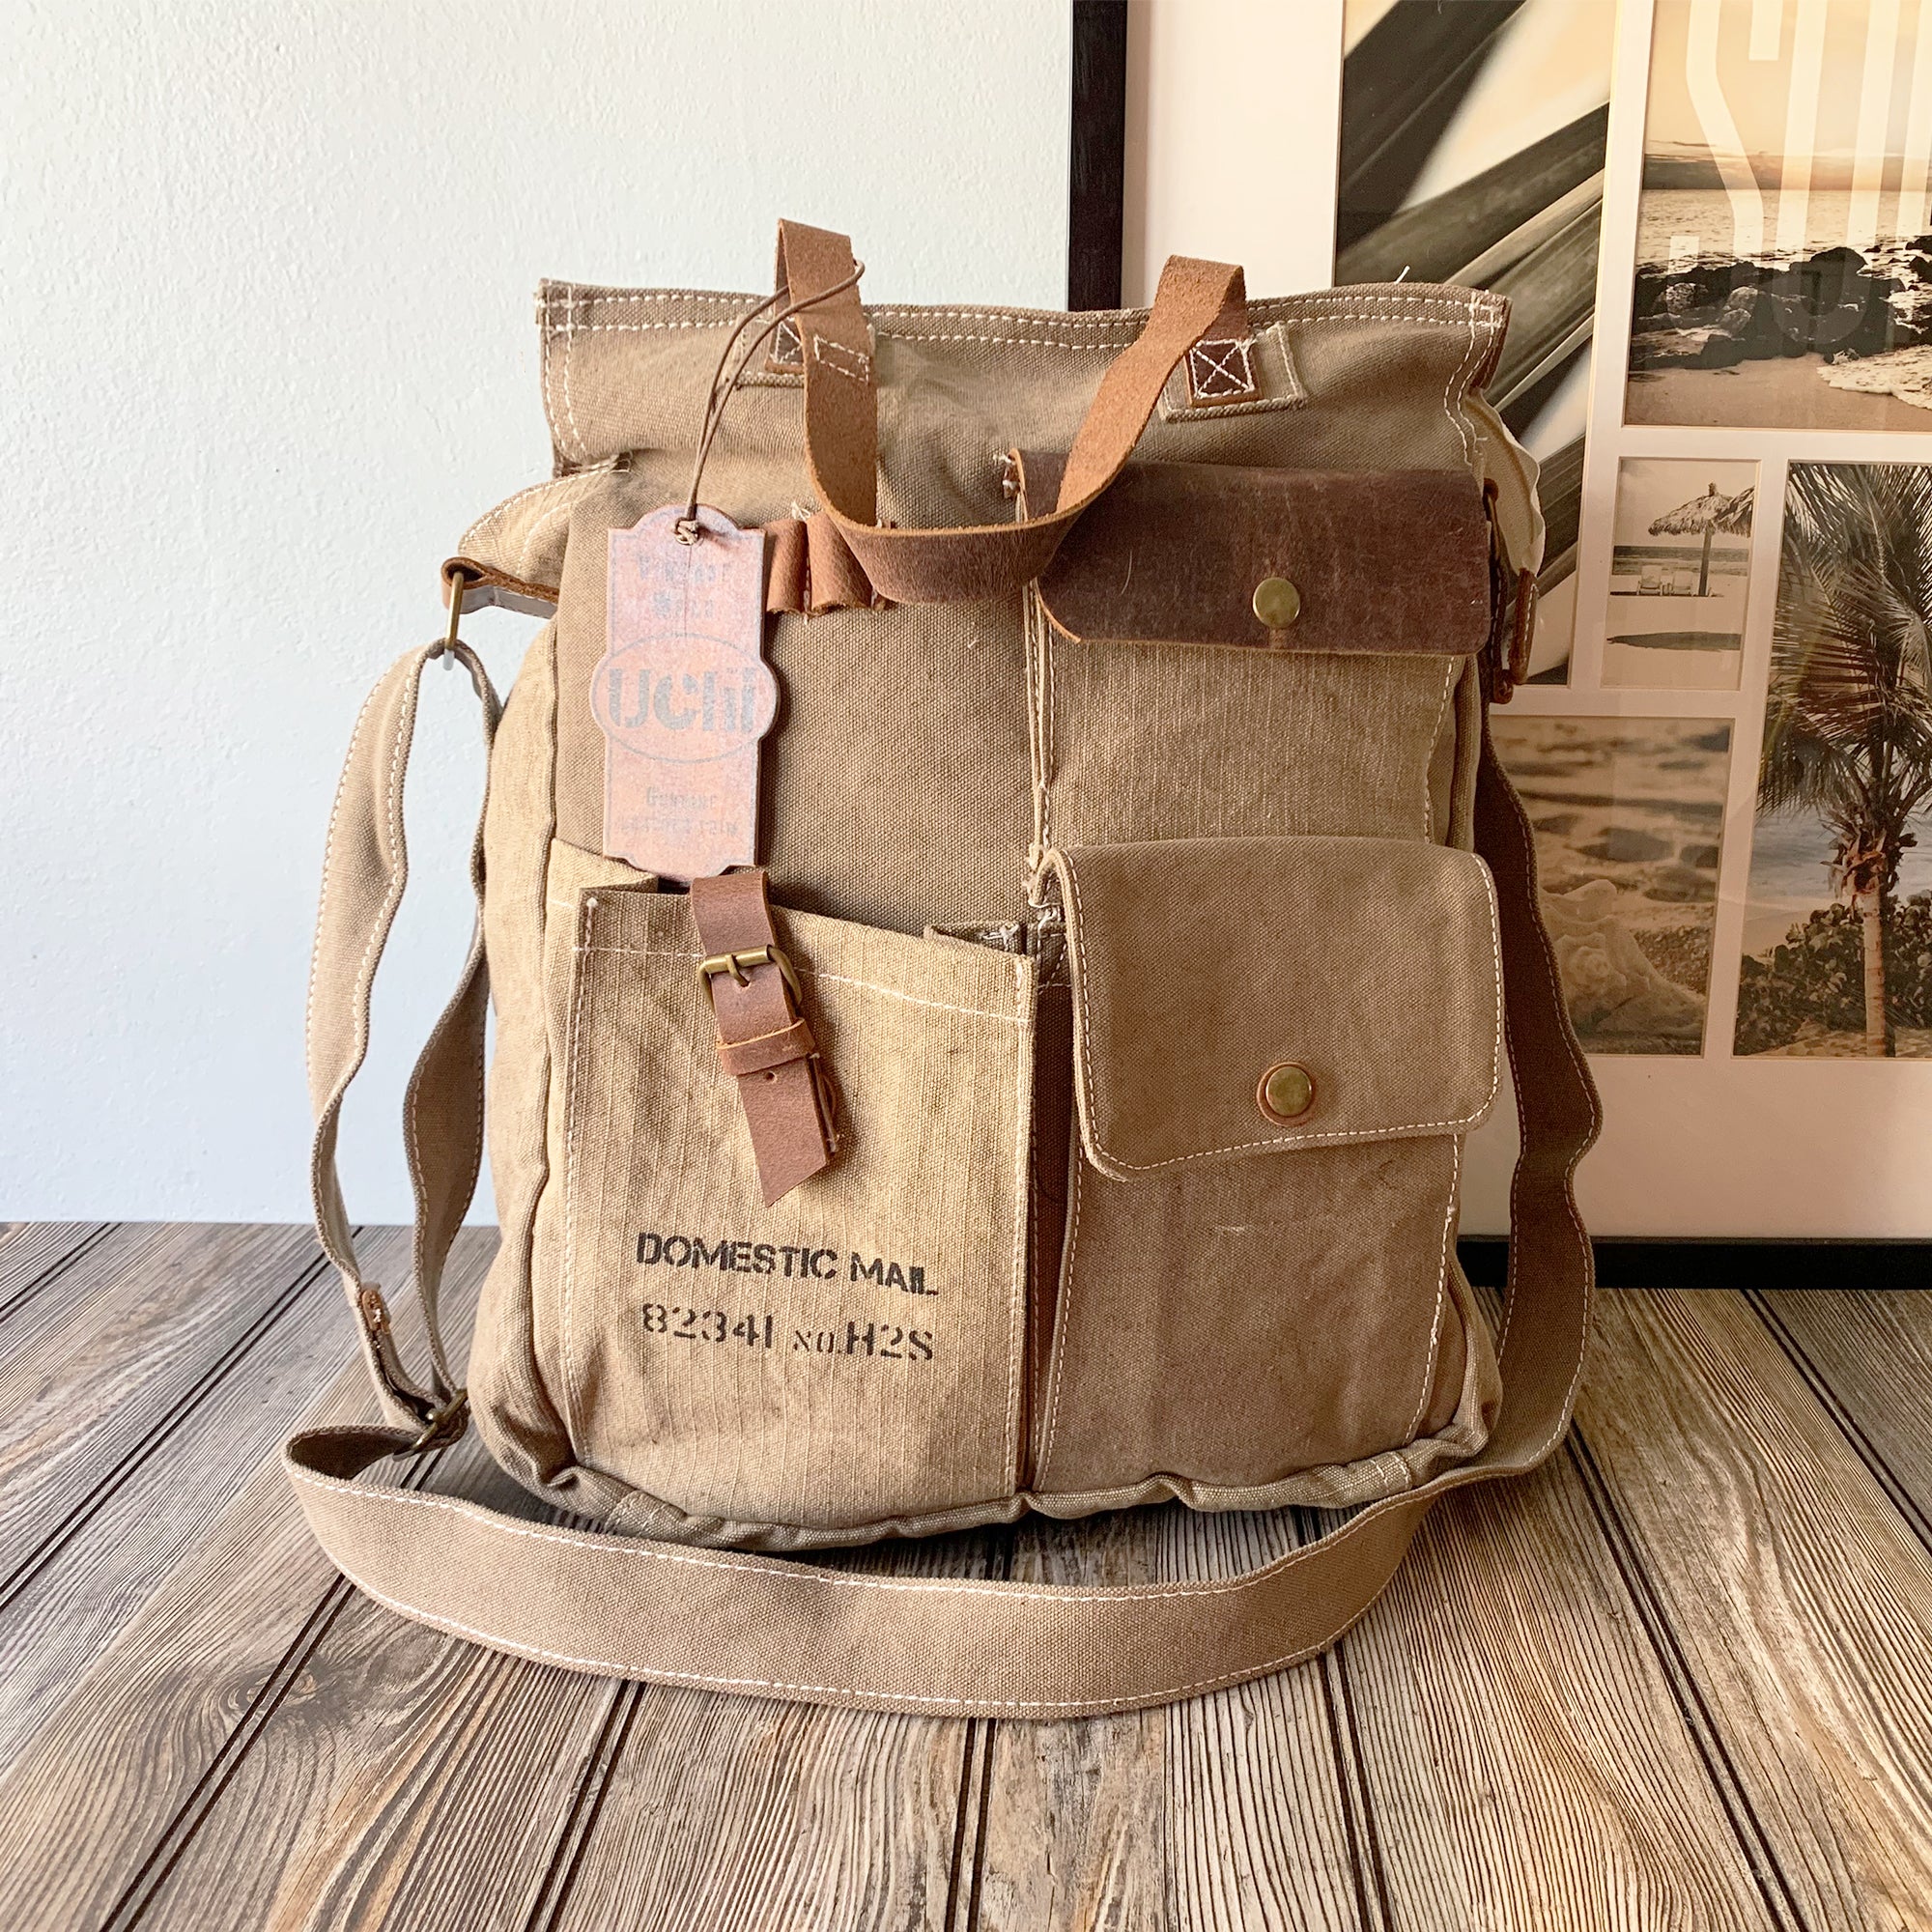 Handmade Vintage Canvas Crossbody Messenger Bag 